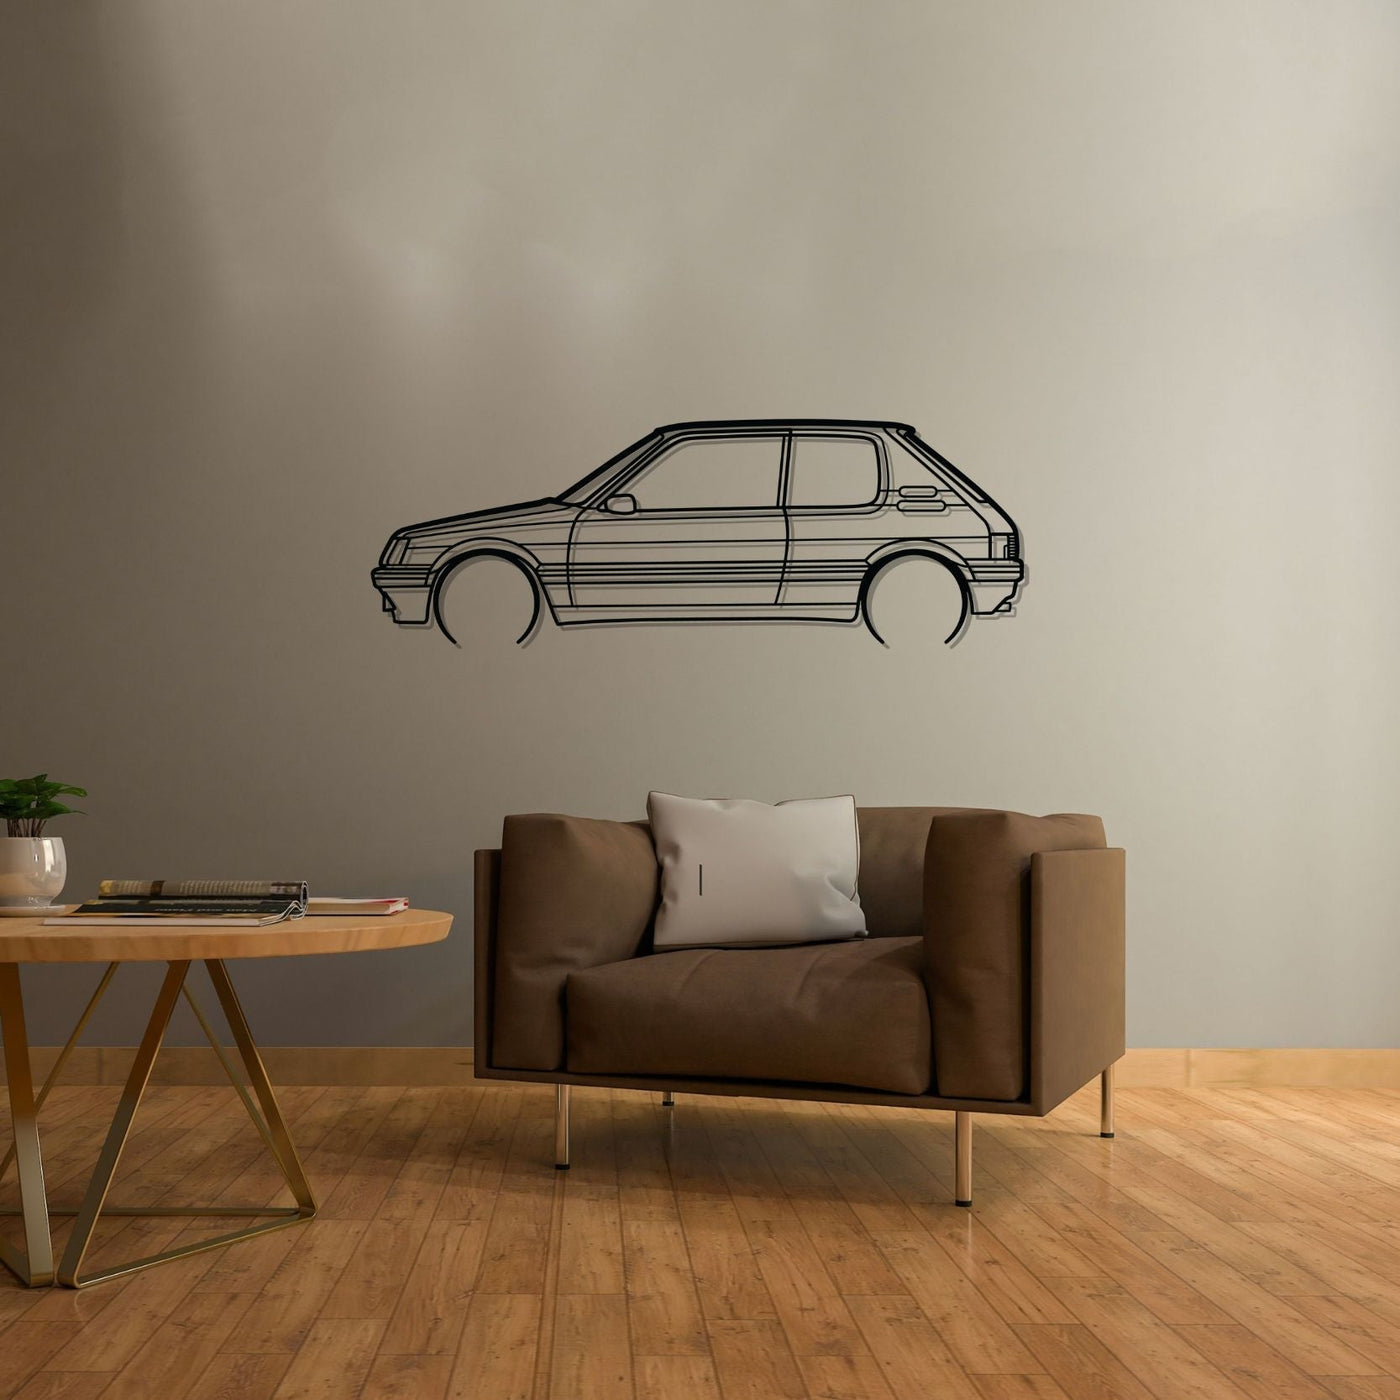 205 GTI Detailed Silhouette Metal Wall Art